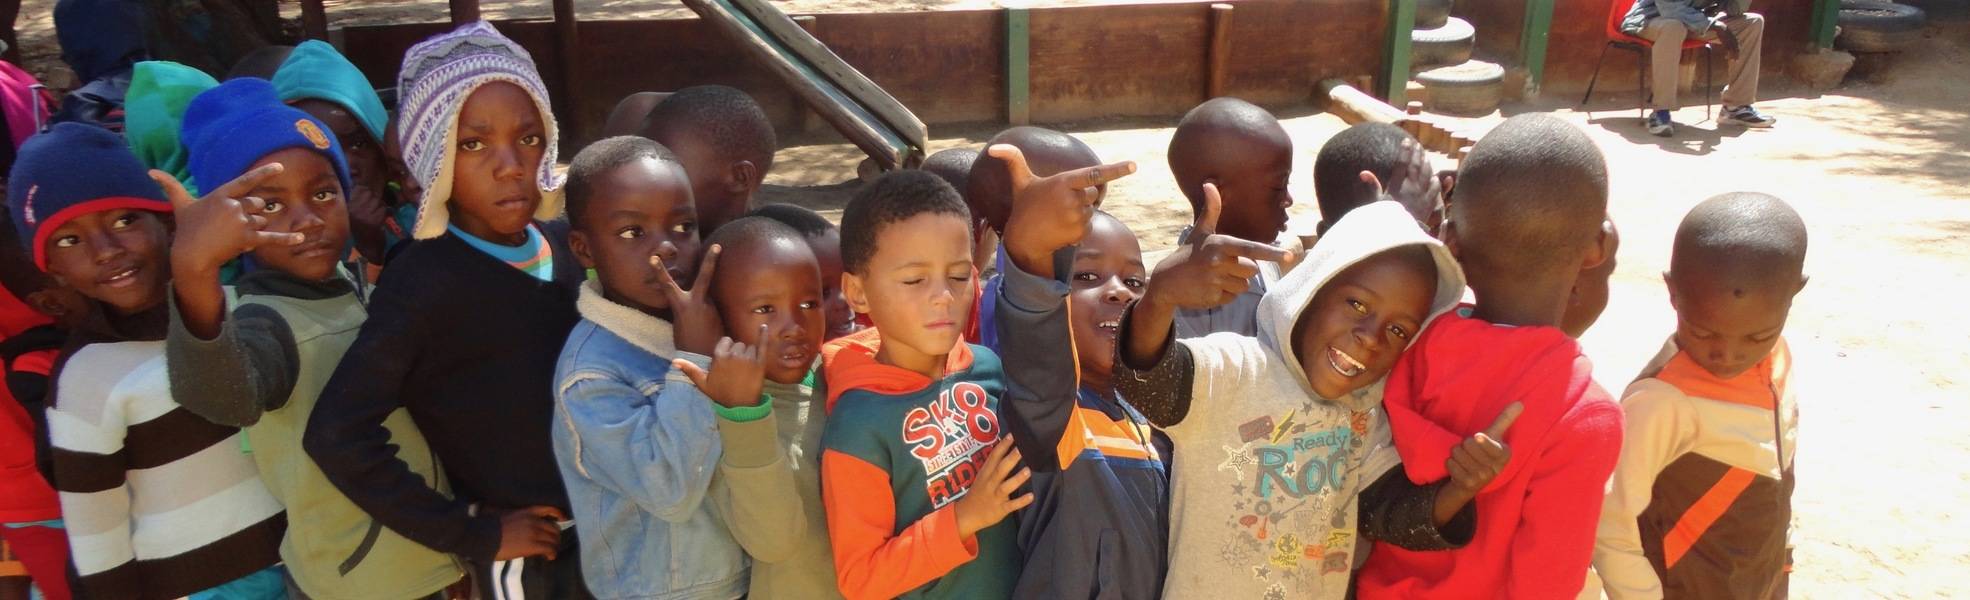 Freiwilligenarbeit in der Kinderbetreuung in Namibia